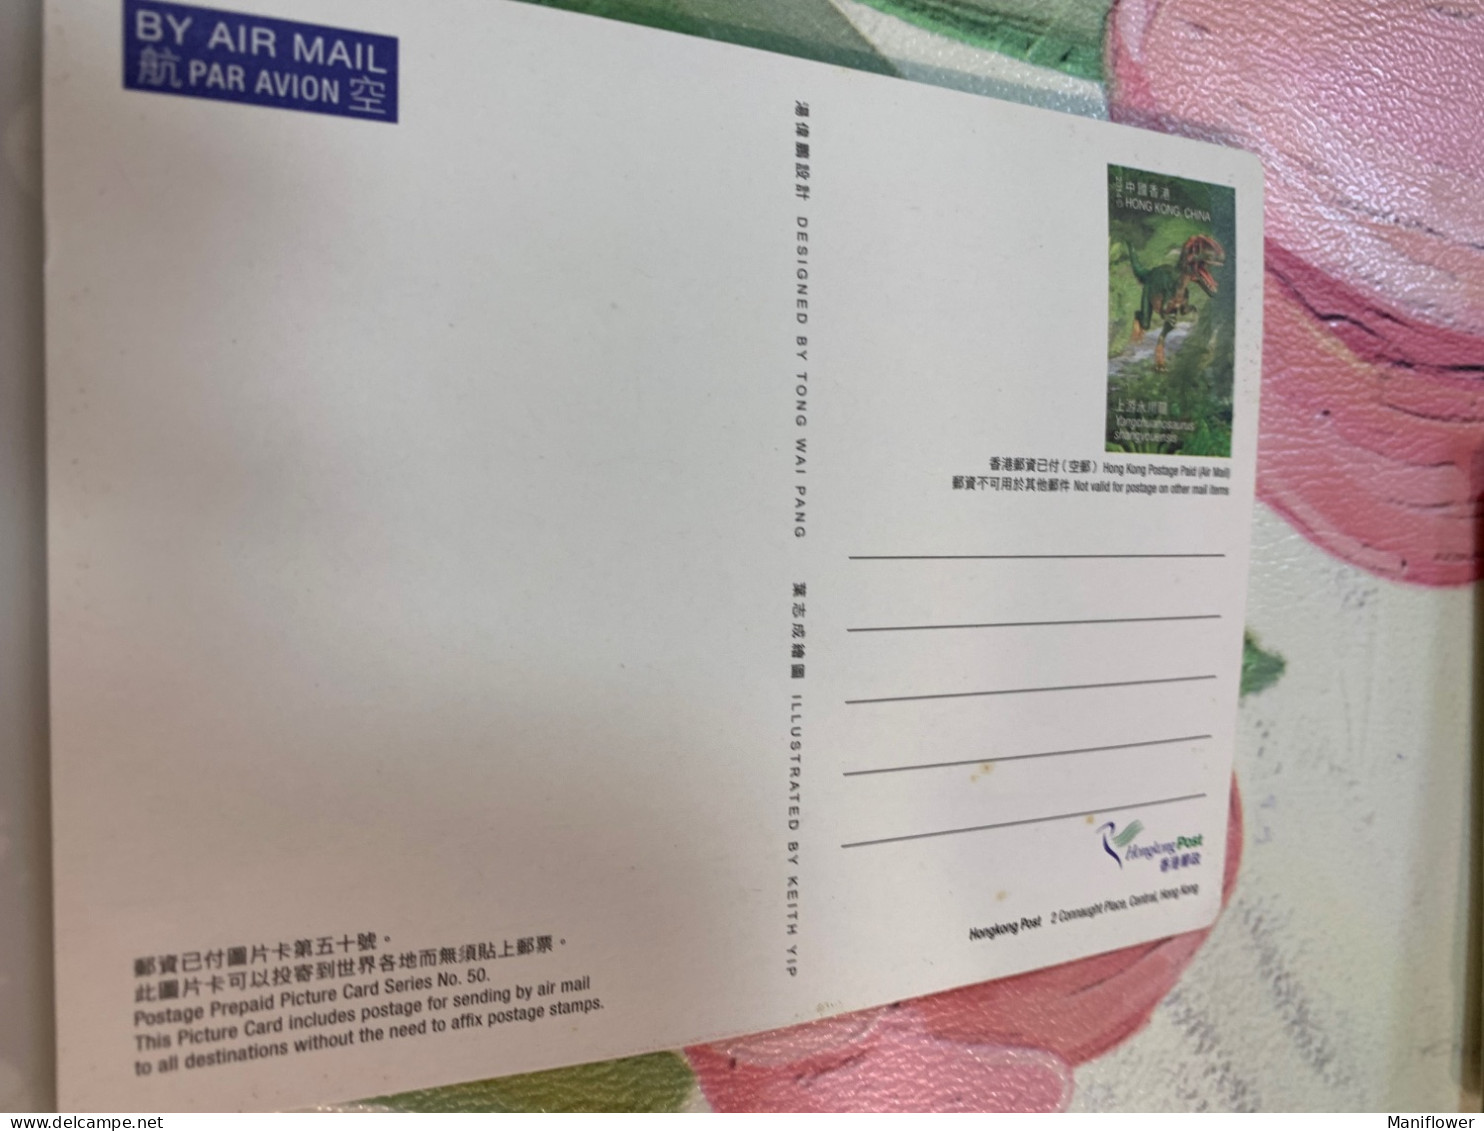 Hong Kong Stamp Dinosaur 3D Hologram 2014 - Covers & Documents